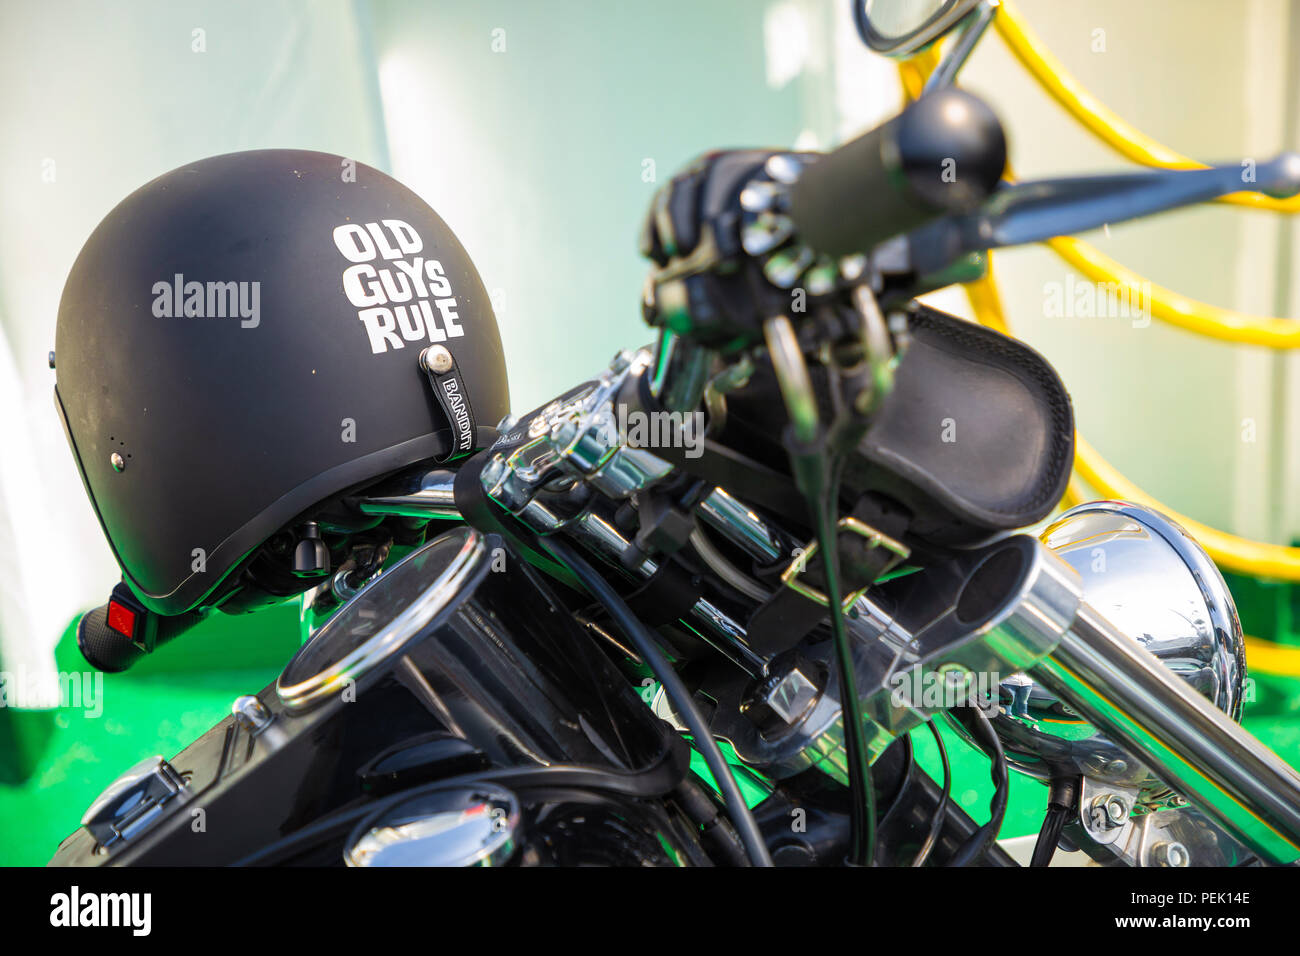 Dalsfjord, Norway - 25.06.2018: Text Old guys rule on motorsycle helmet Stock Photo